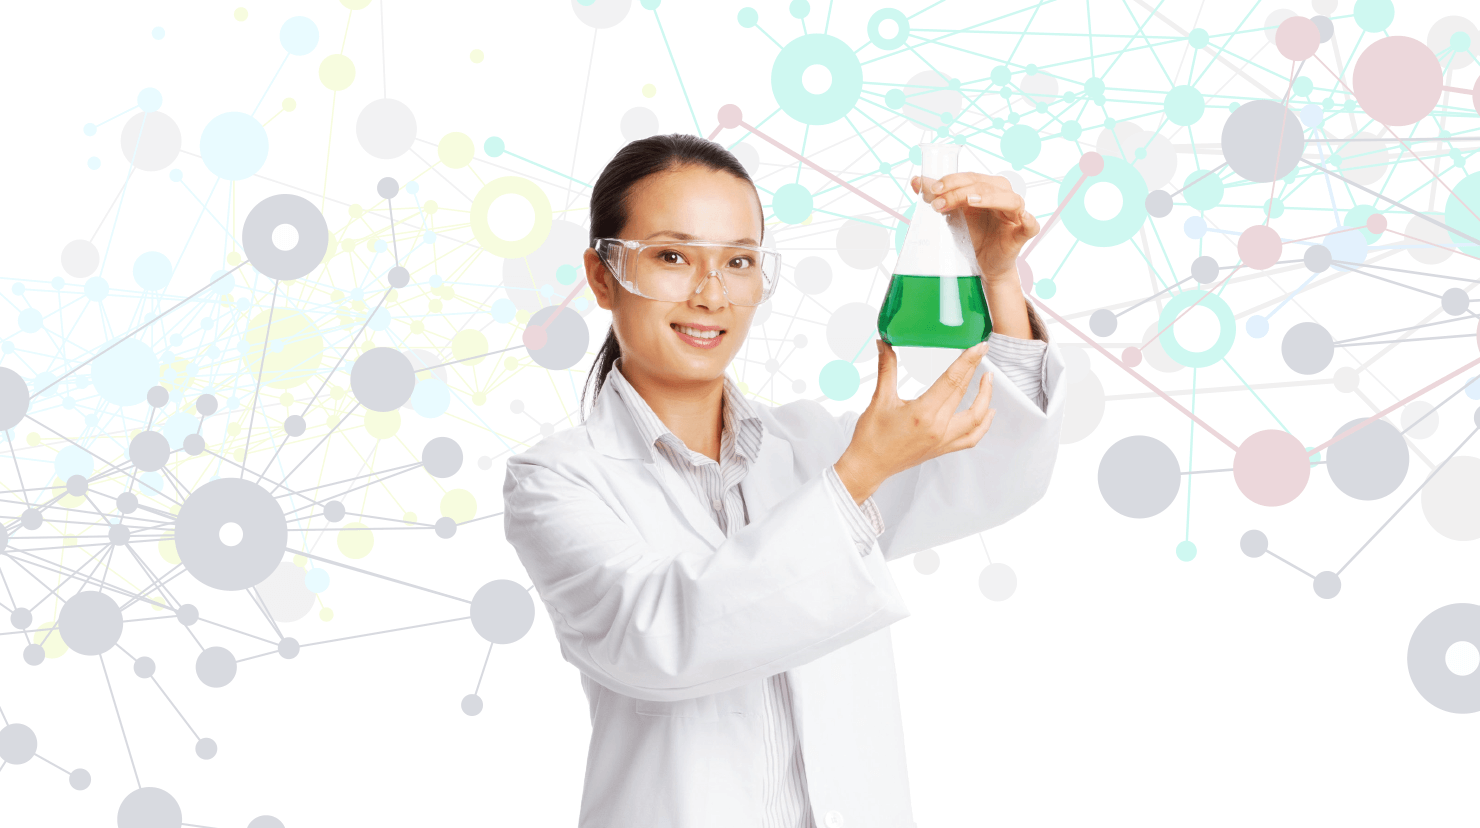 Woman in white lab coat holding beaker